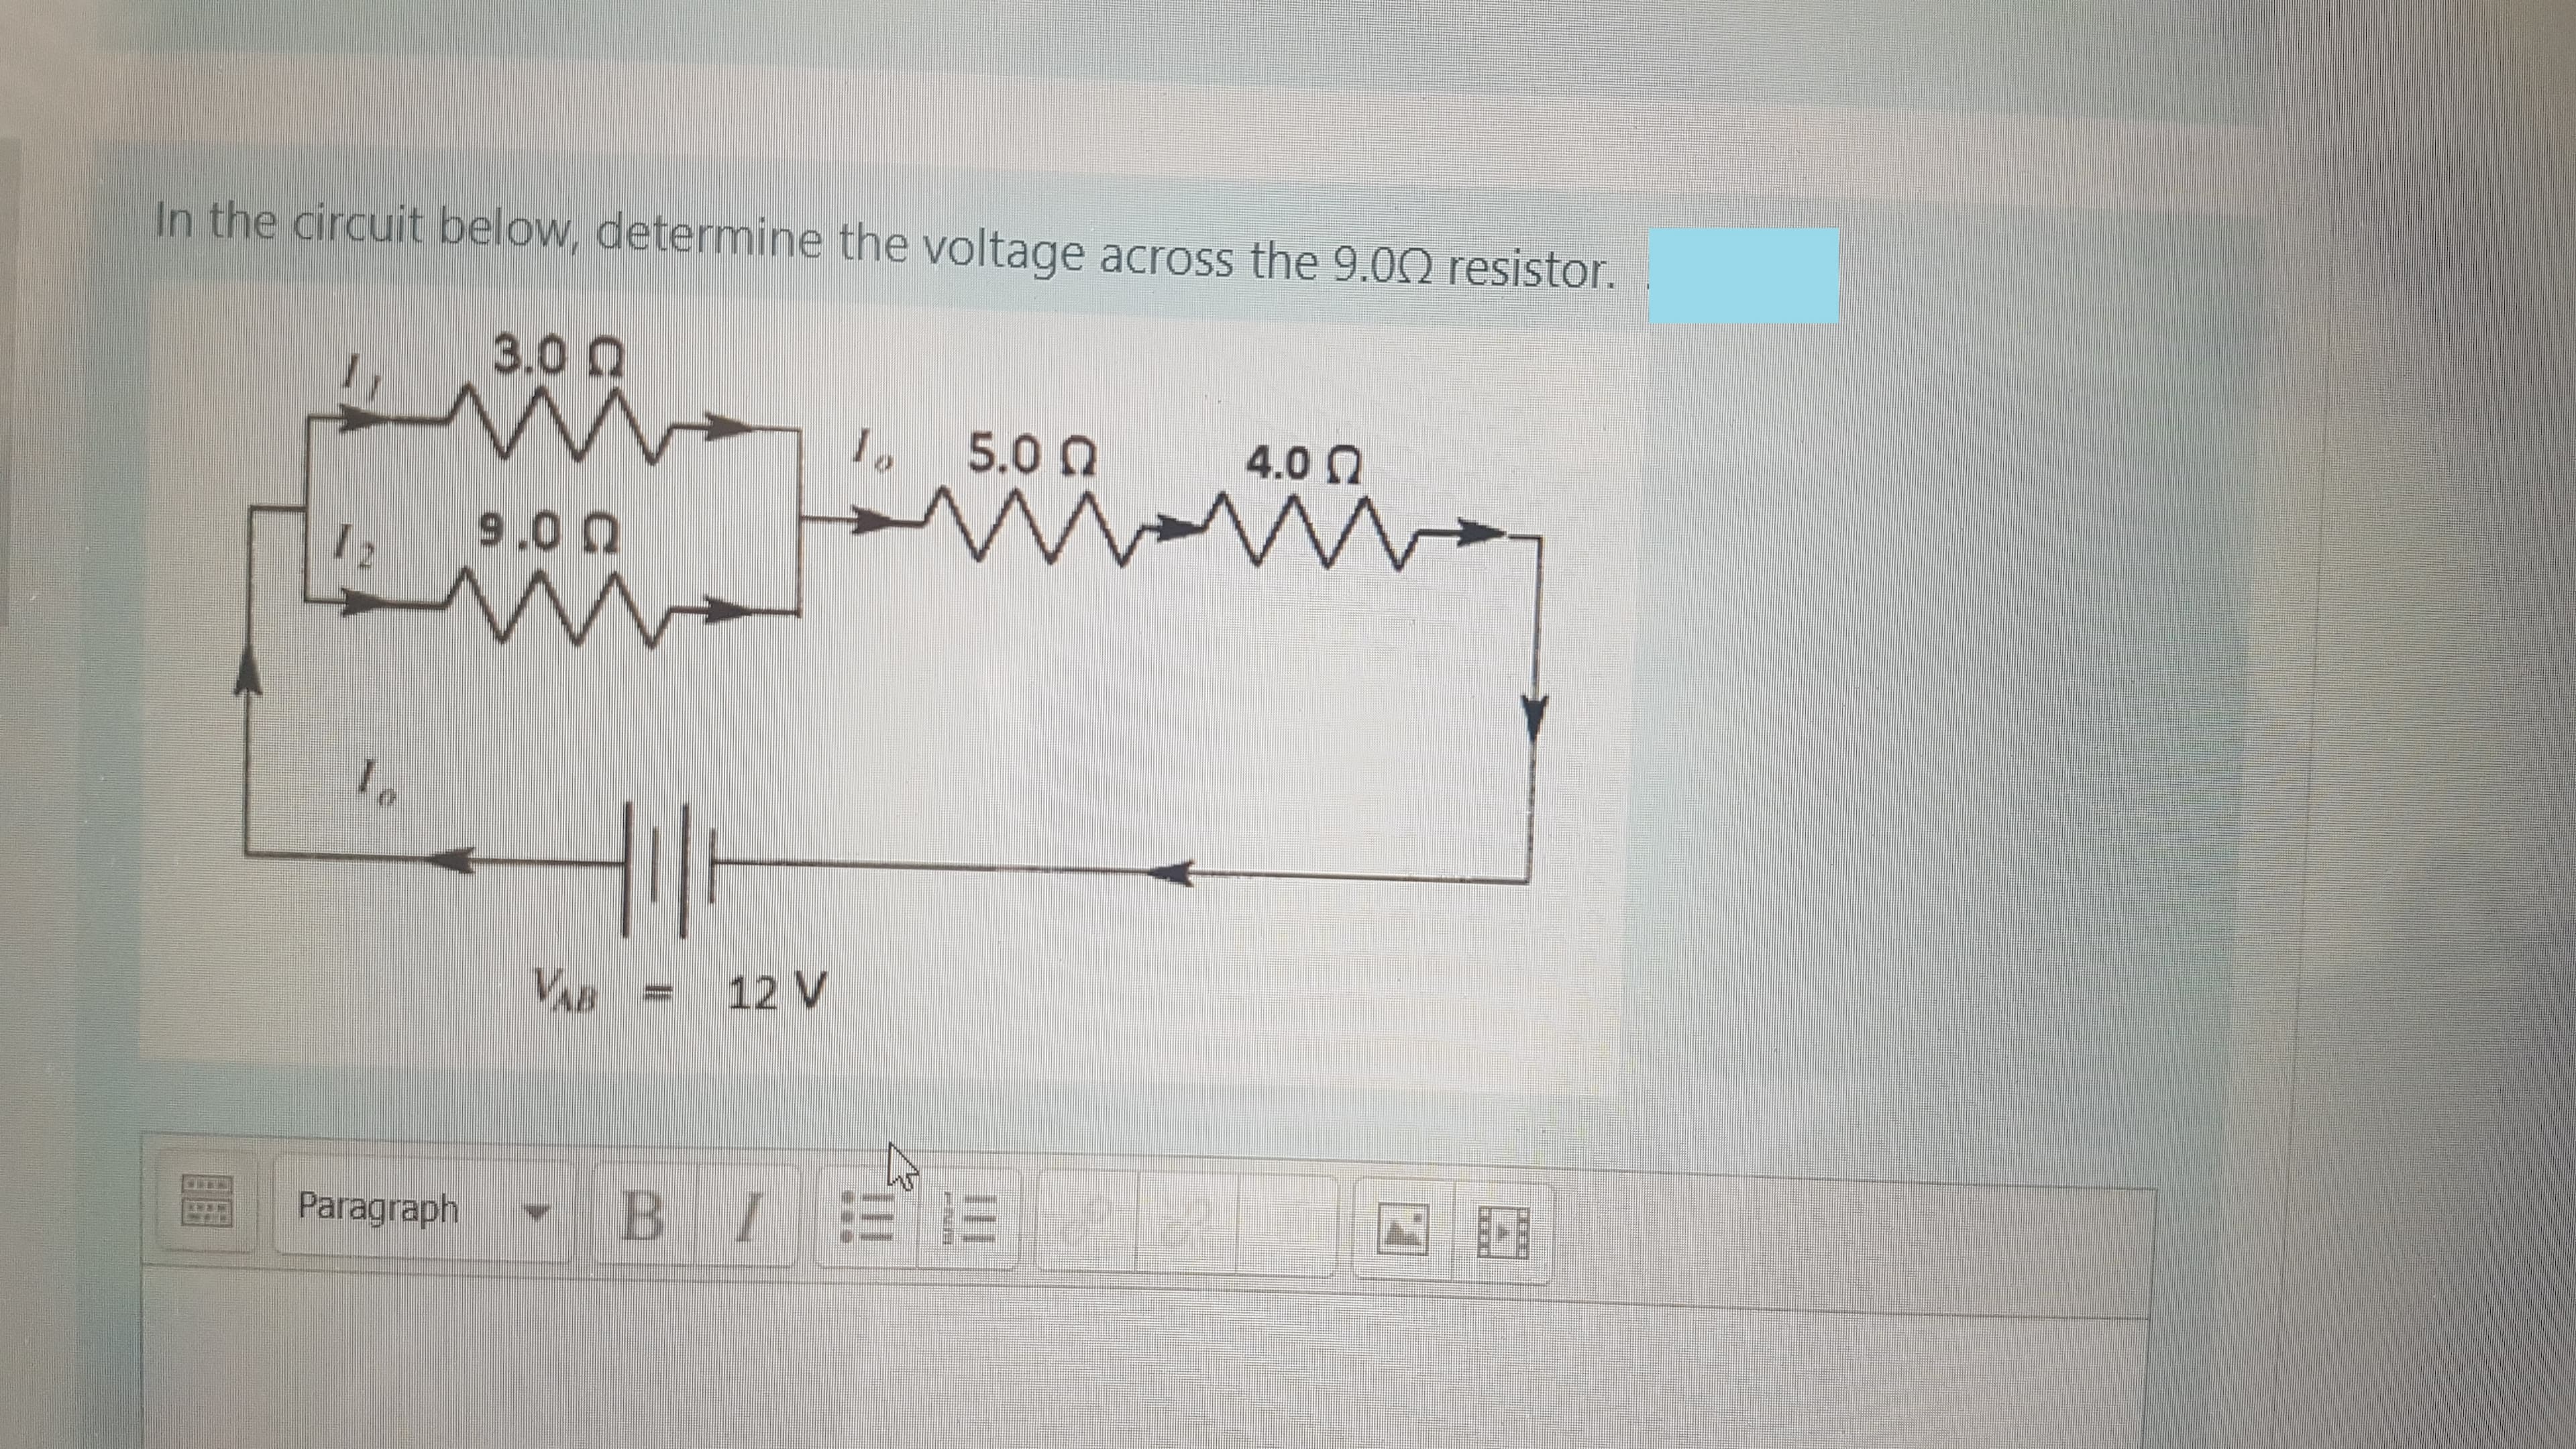 In the circuit below, determine the voltage across the 9.00 resistor.
3.0 n
5.0 0
4.0 0
9.0 0
12
VAB
12 V
Paragraph
BIEE
